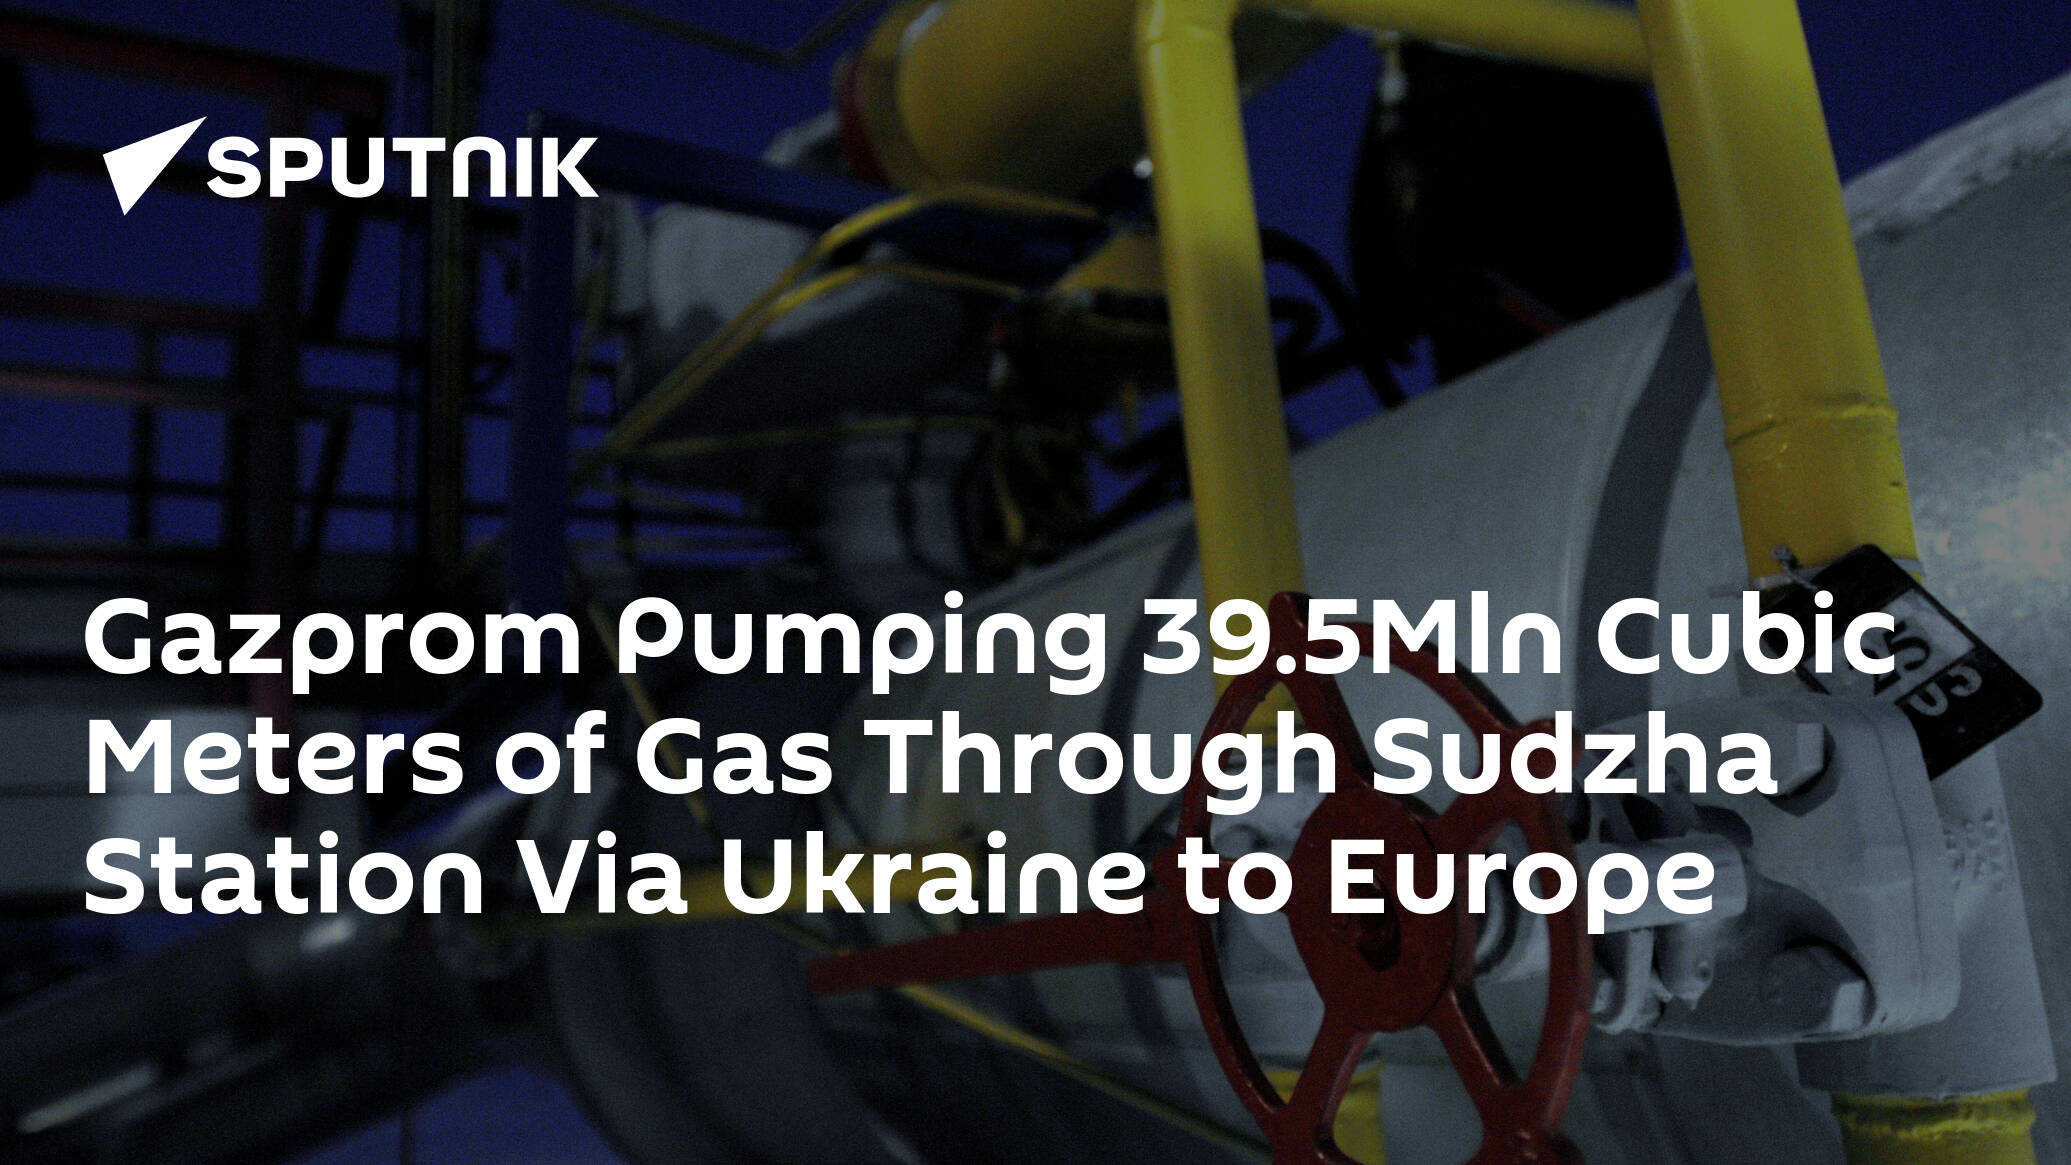 Gazprom Pumping 39.5Mln Cubic Meters of Gas Through Sudzha Station Via Ukraine to Europe